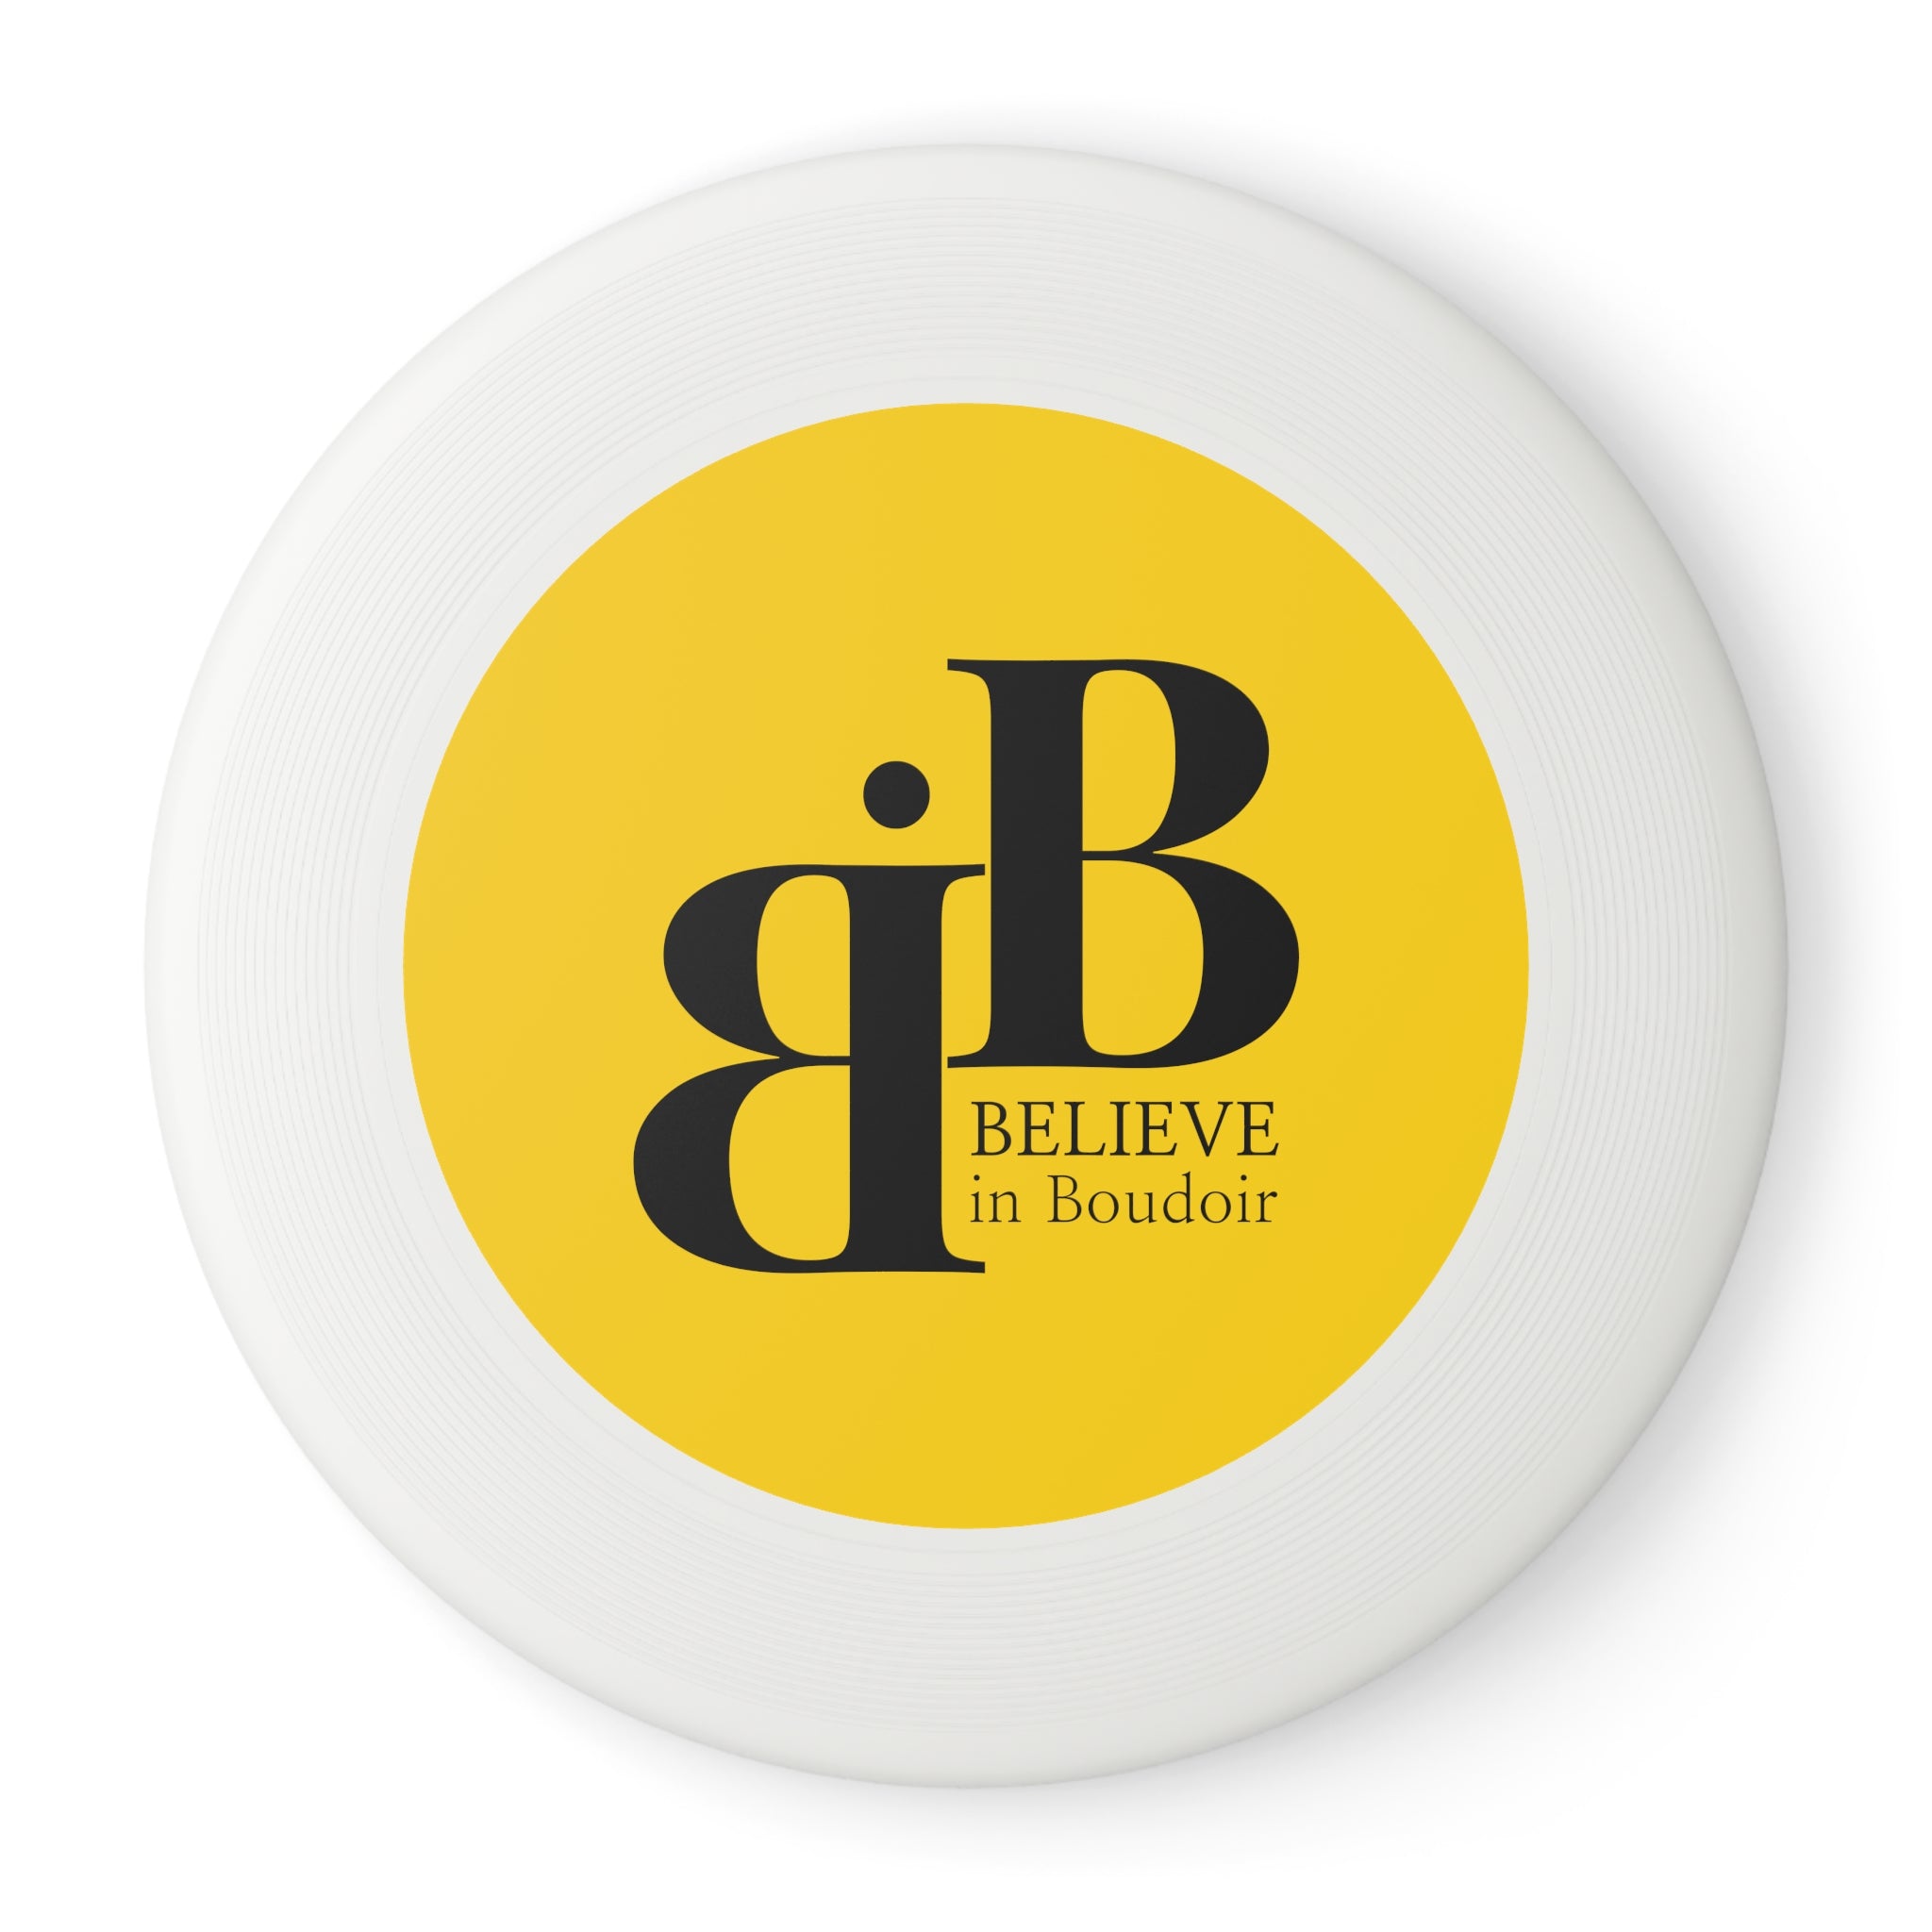 Believe in Boudoir Yellow Wham-O Frisbee with Black Logo